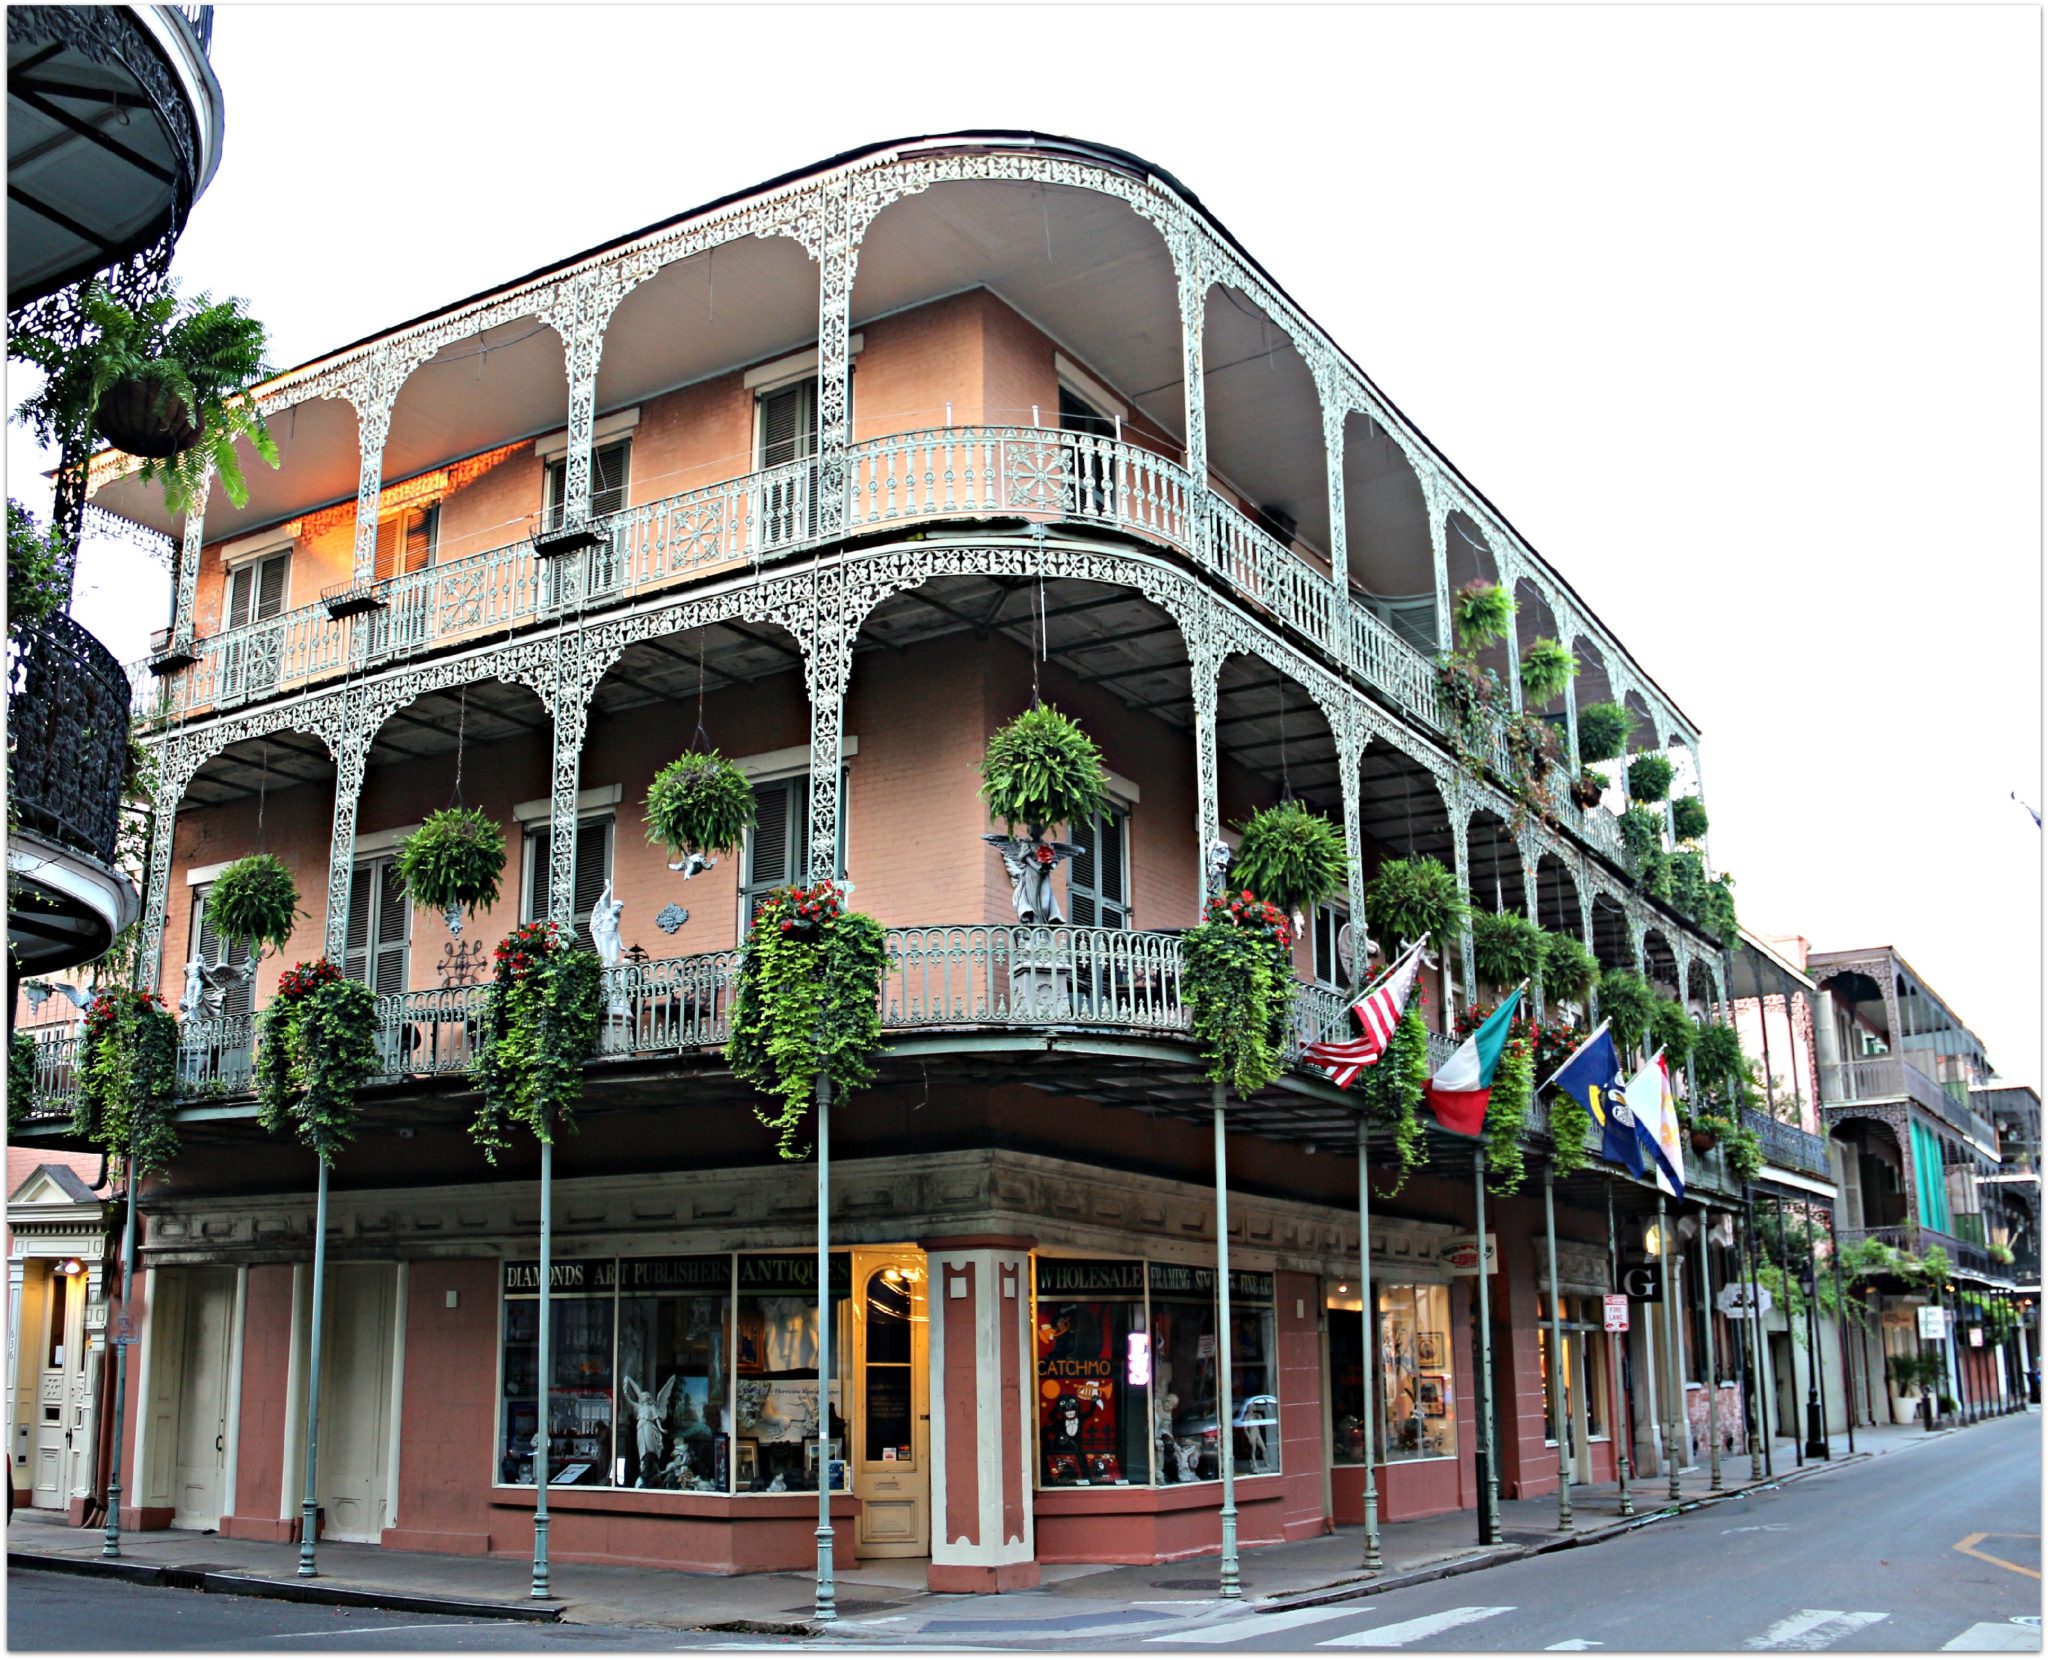 Royal Street Corners in New Orleans